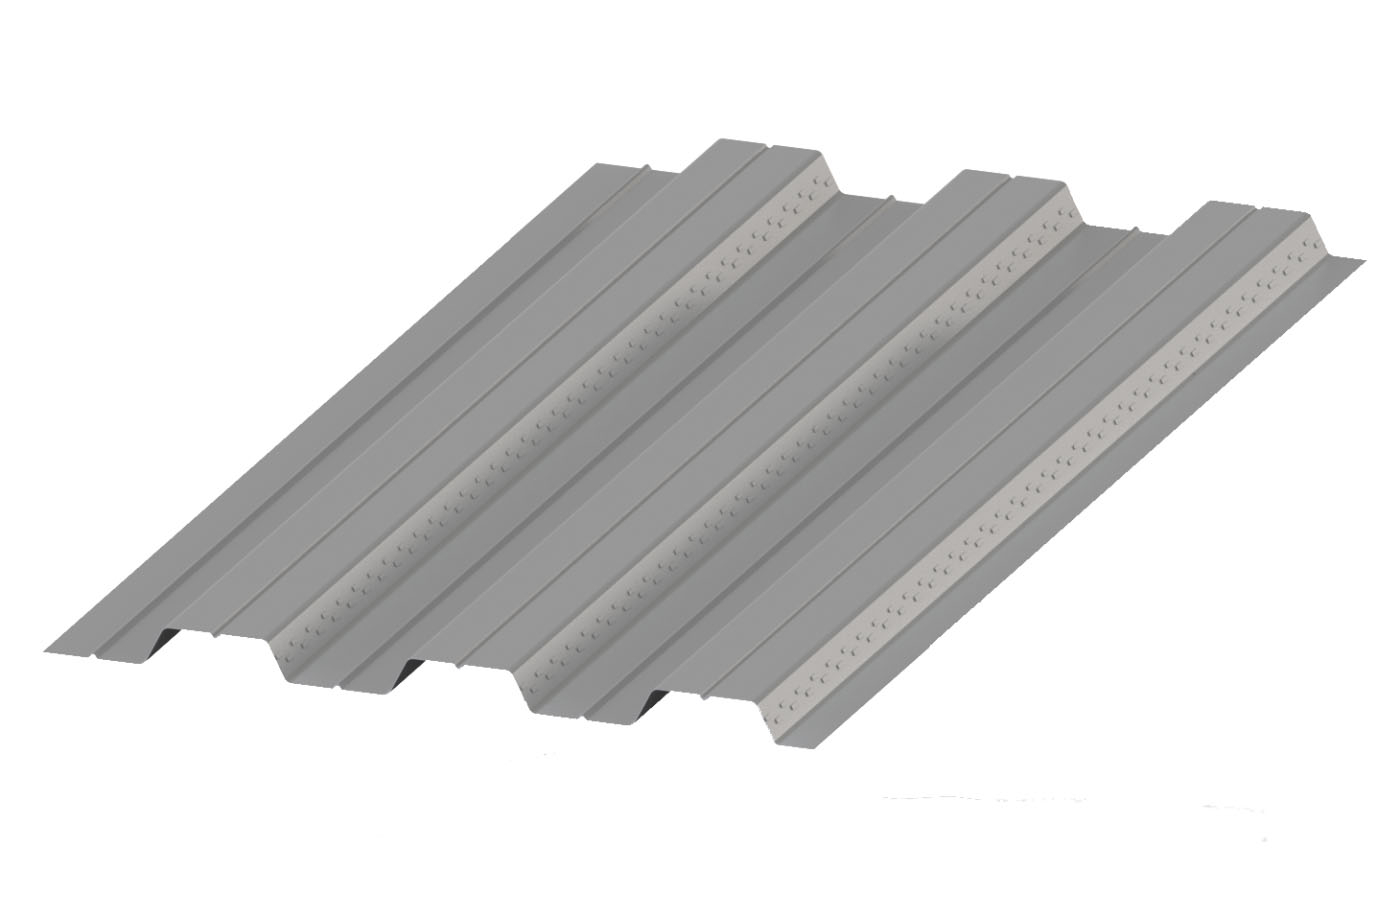 2 Composite Steel Deck Floor Deck Supplier intended for proportions 1400 X 900